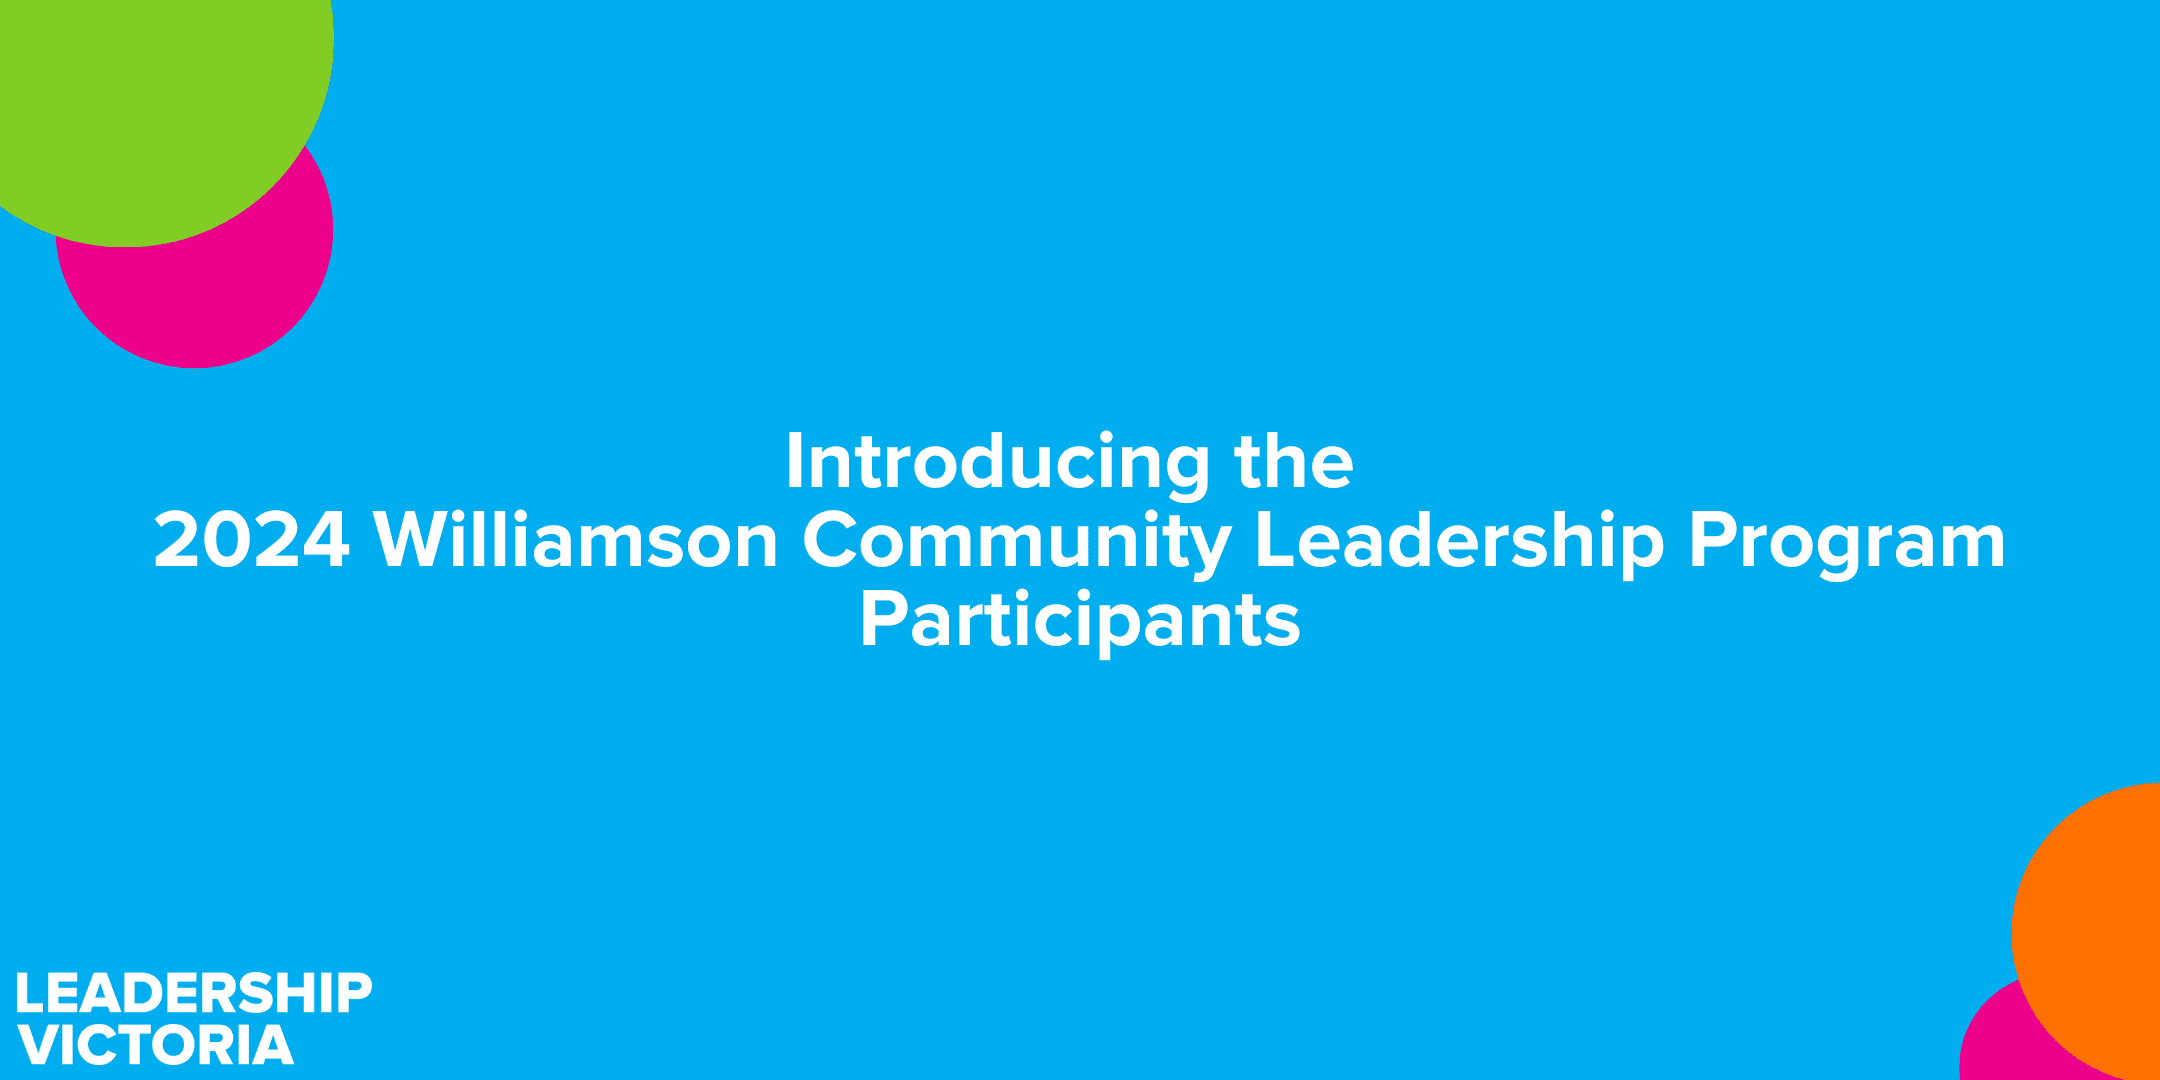 Williamson Community Leadership Program Participants for 2024